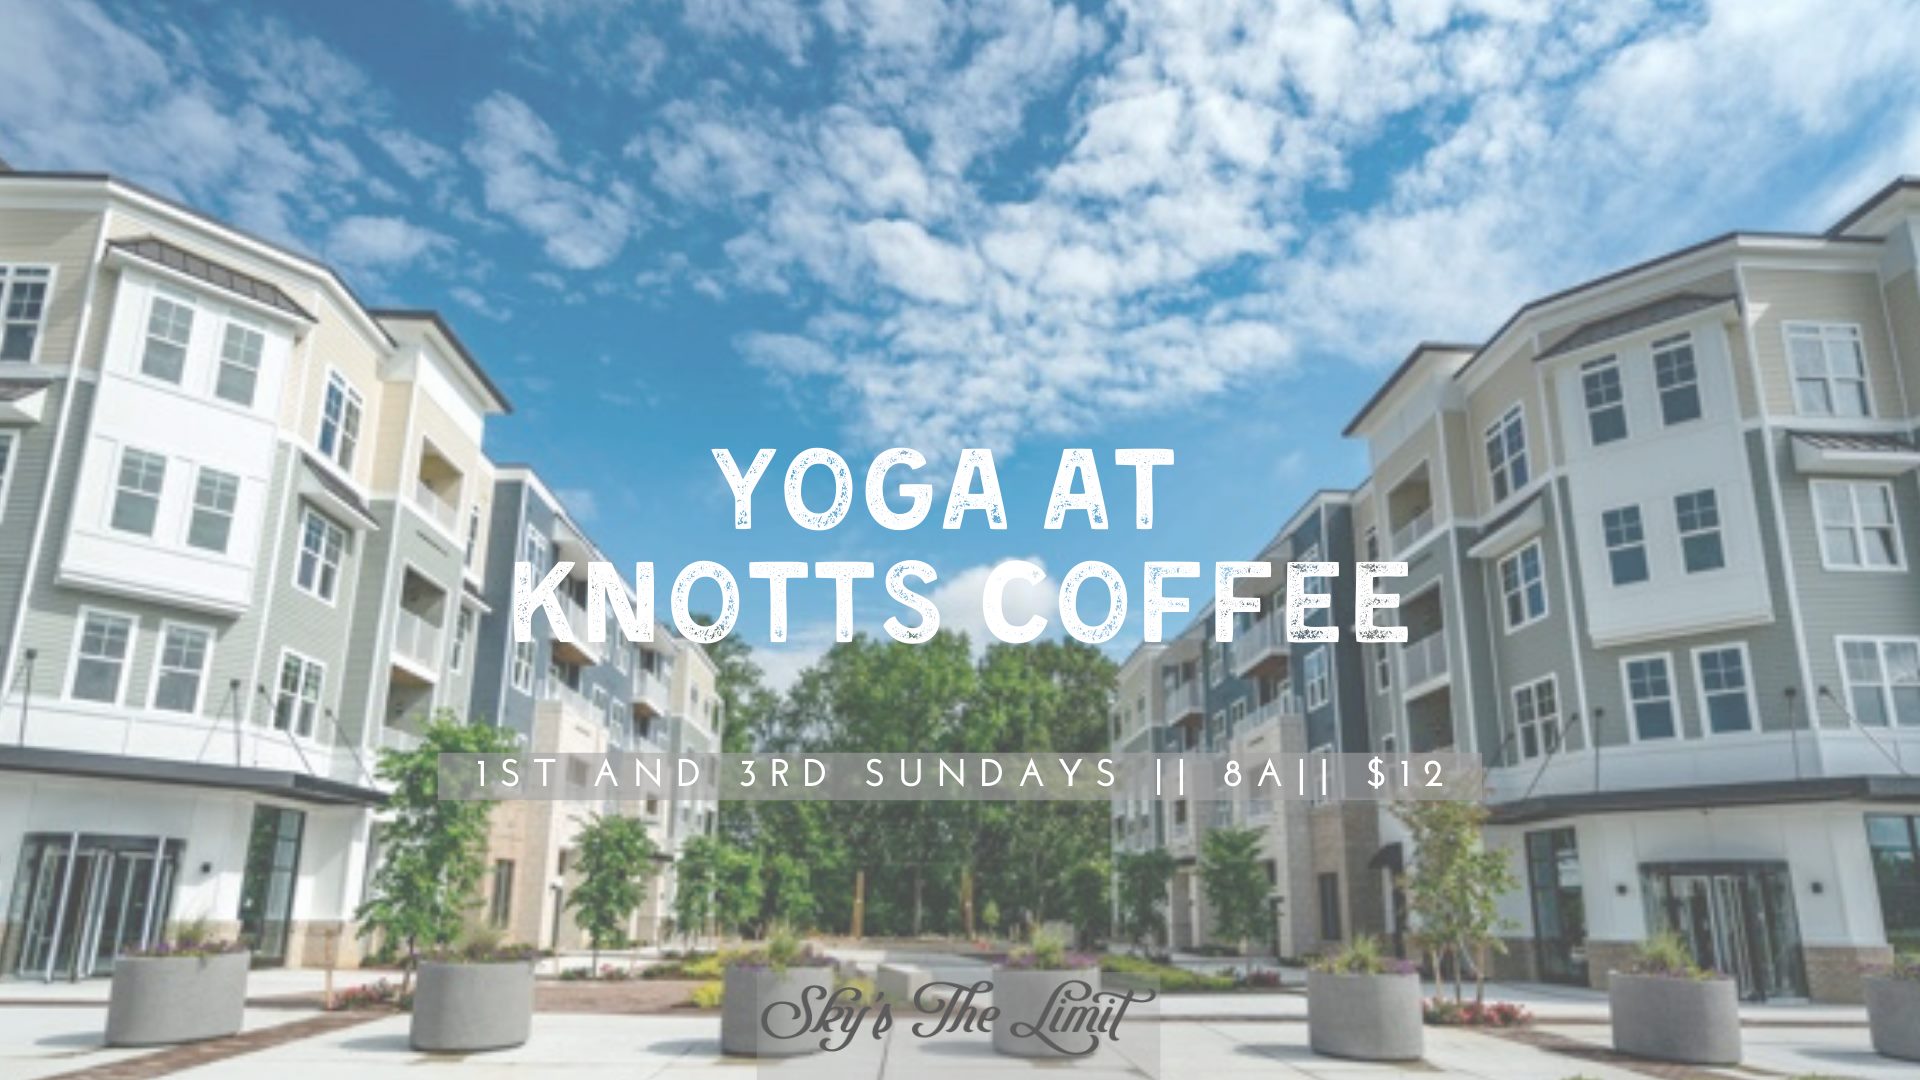 Sky's the Limit Yoga at Knotts Coffee Company